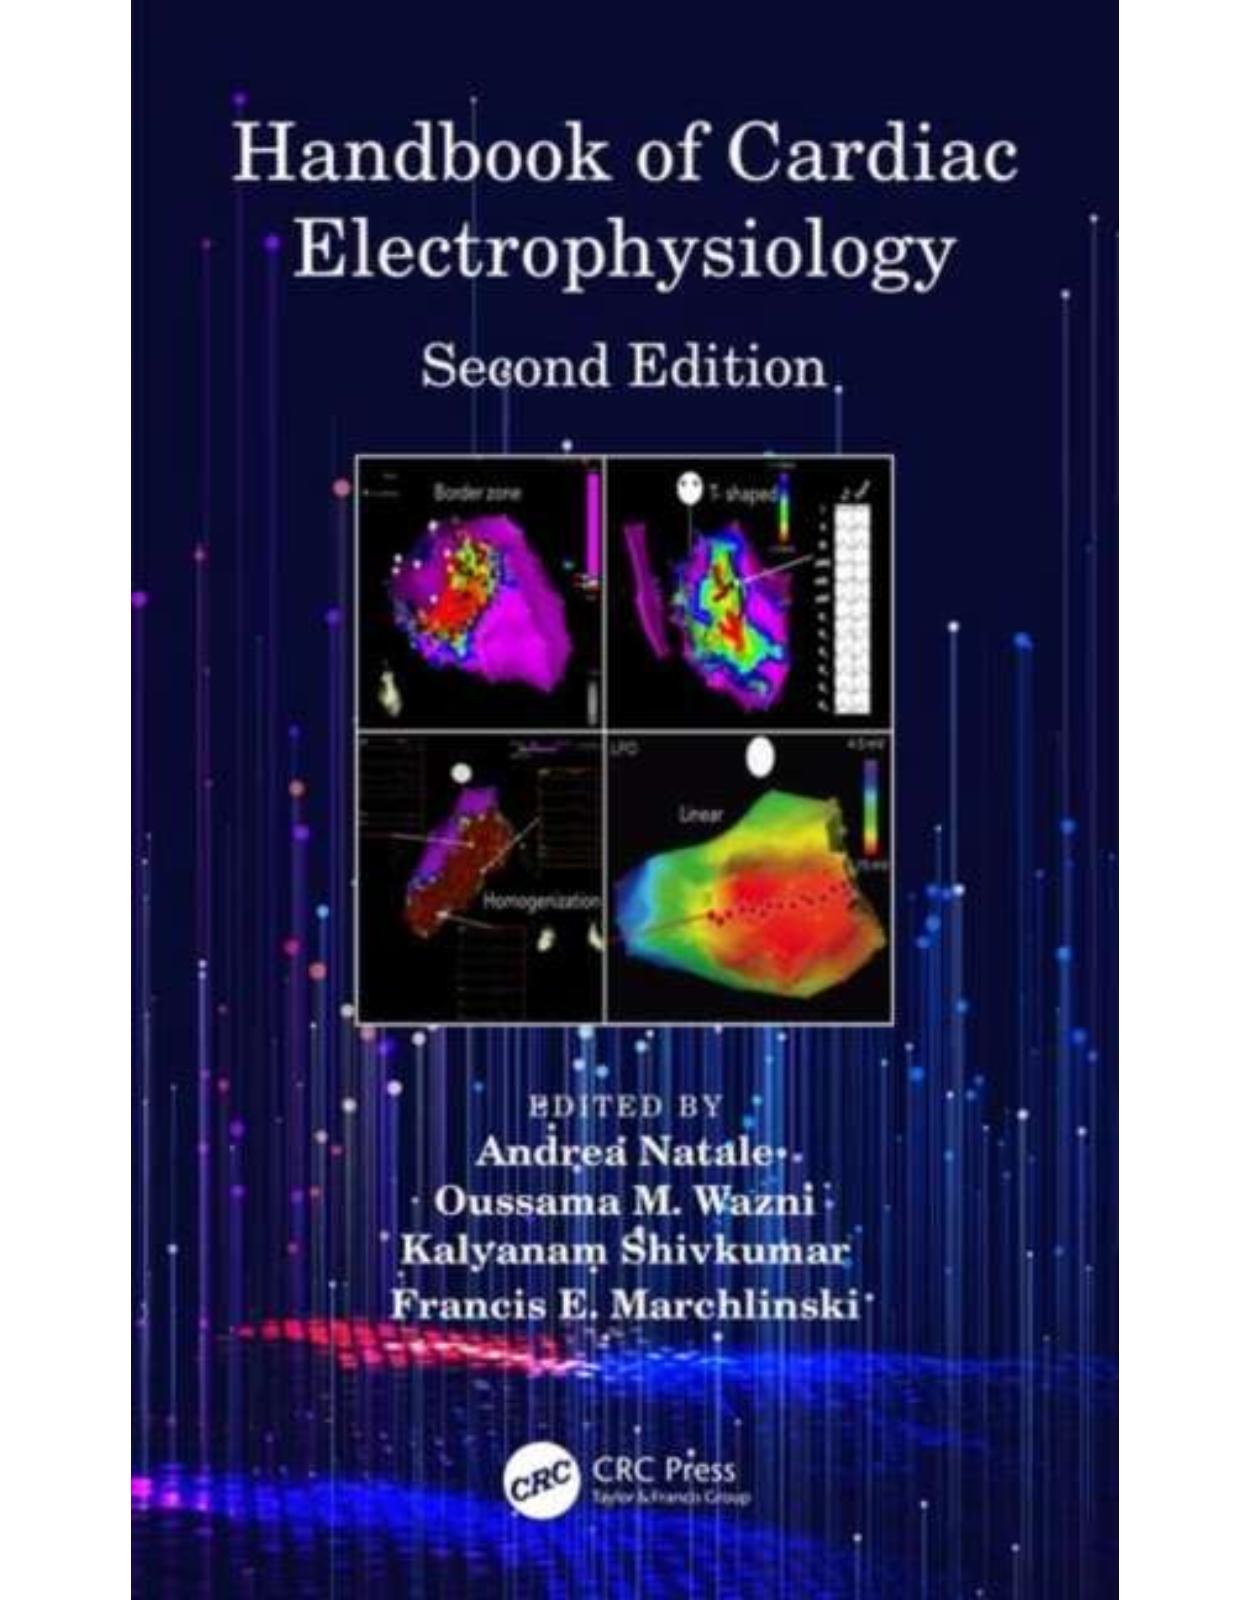 Handbook of Cardiac Electrophysiology, Second Edition